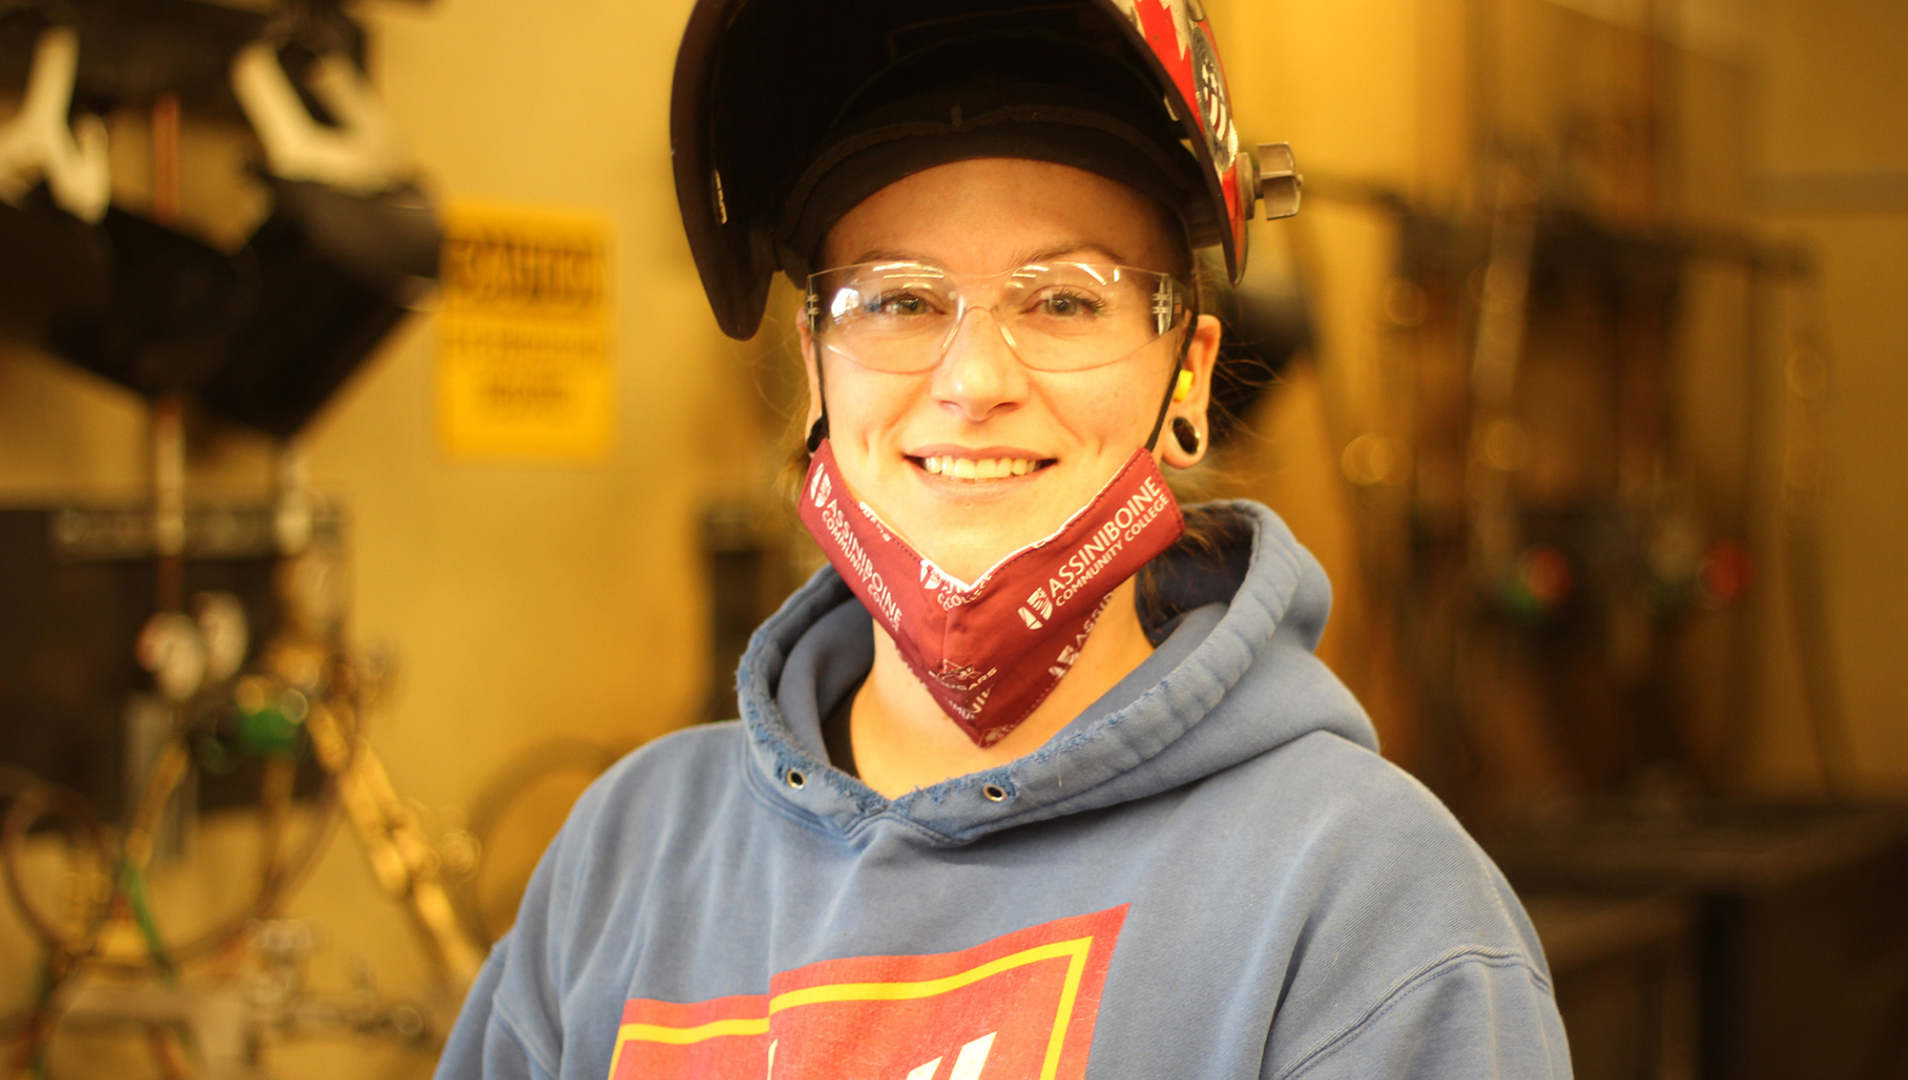 Heather Bruederlin profile photo in the welding shop.